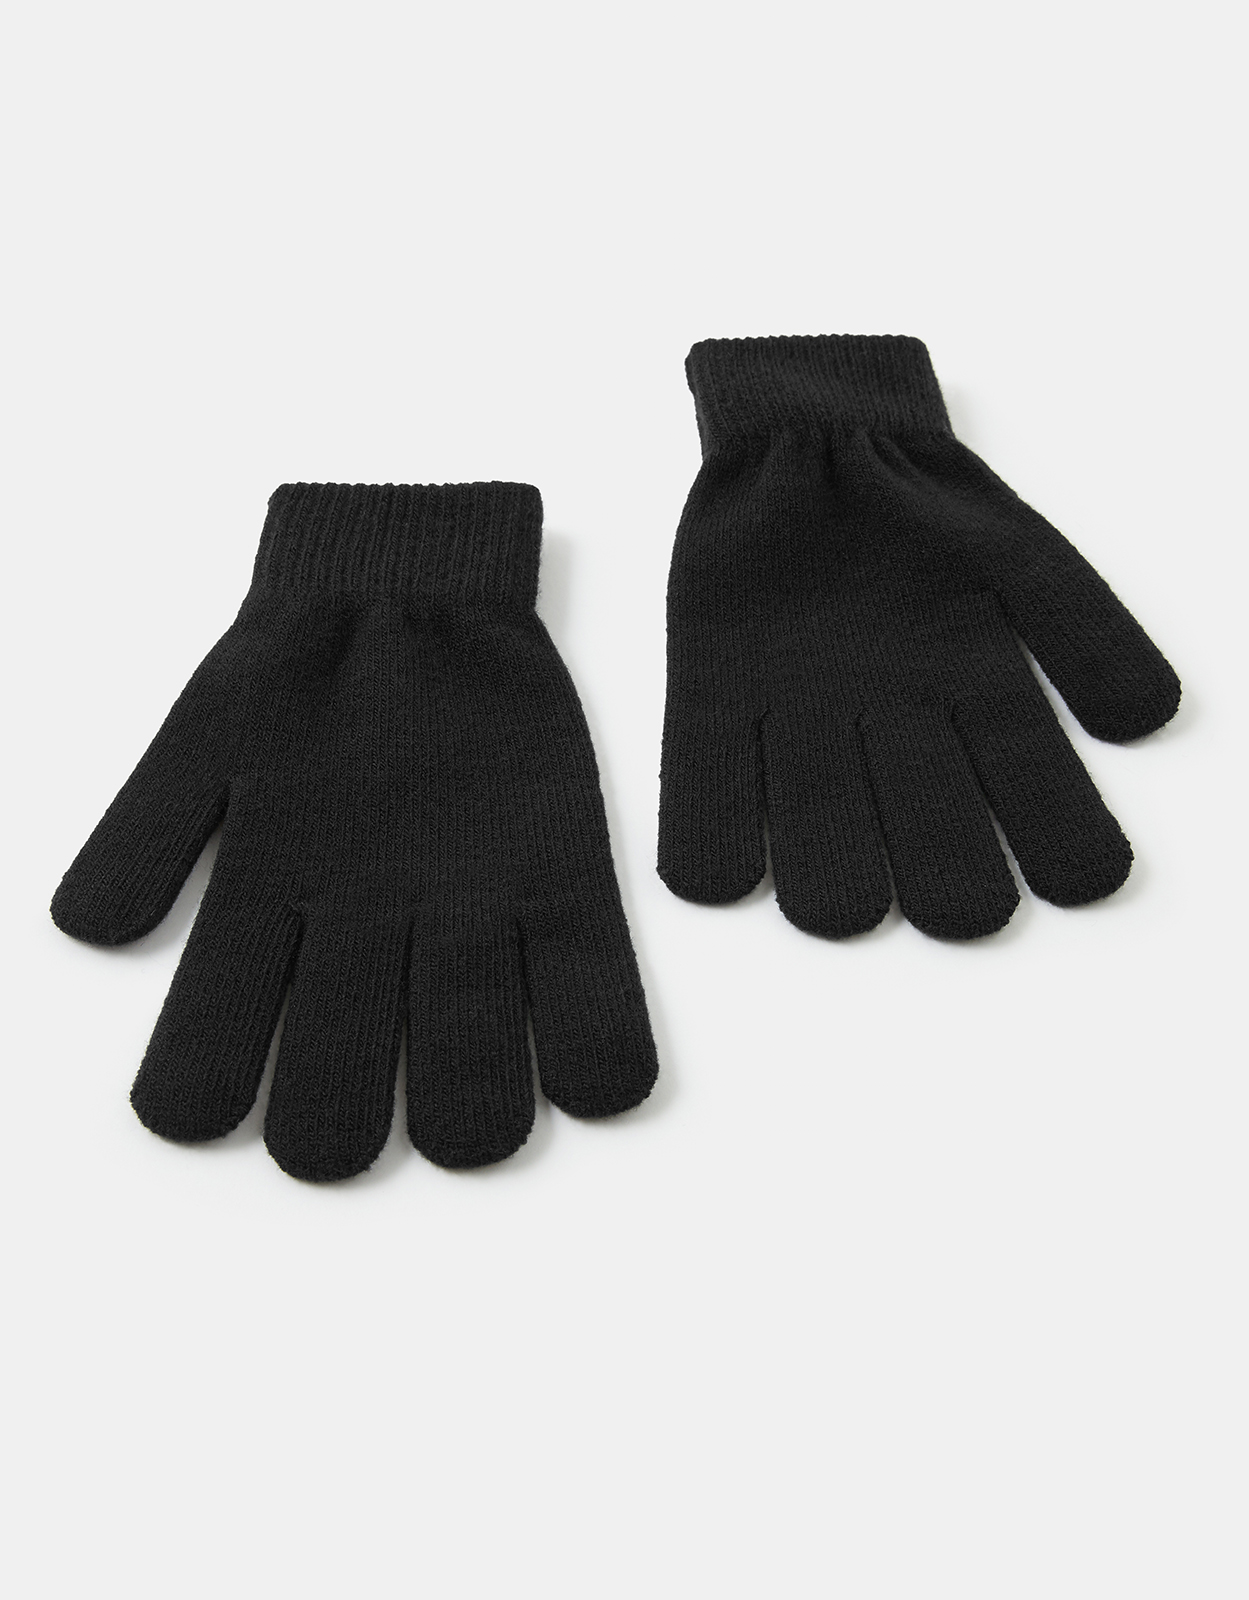 Accessorize Black Super-Stretchy Knit Gloves, Size: One Size